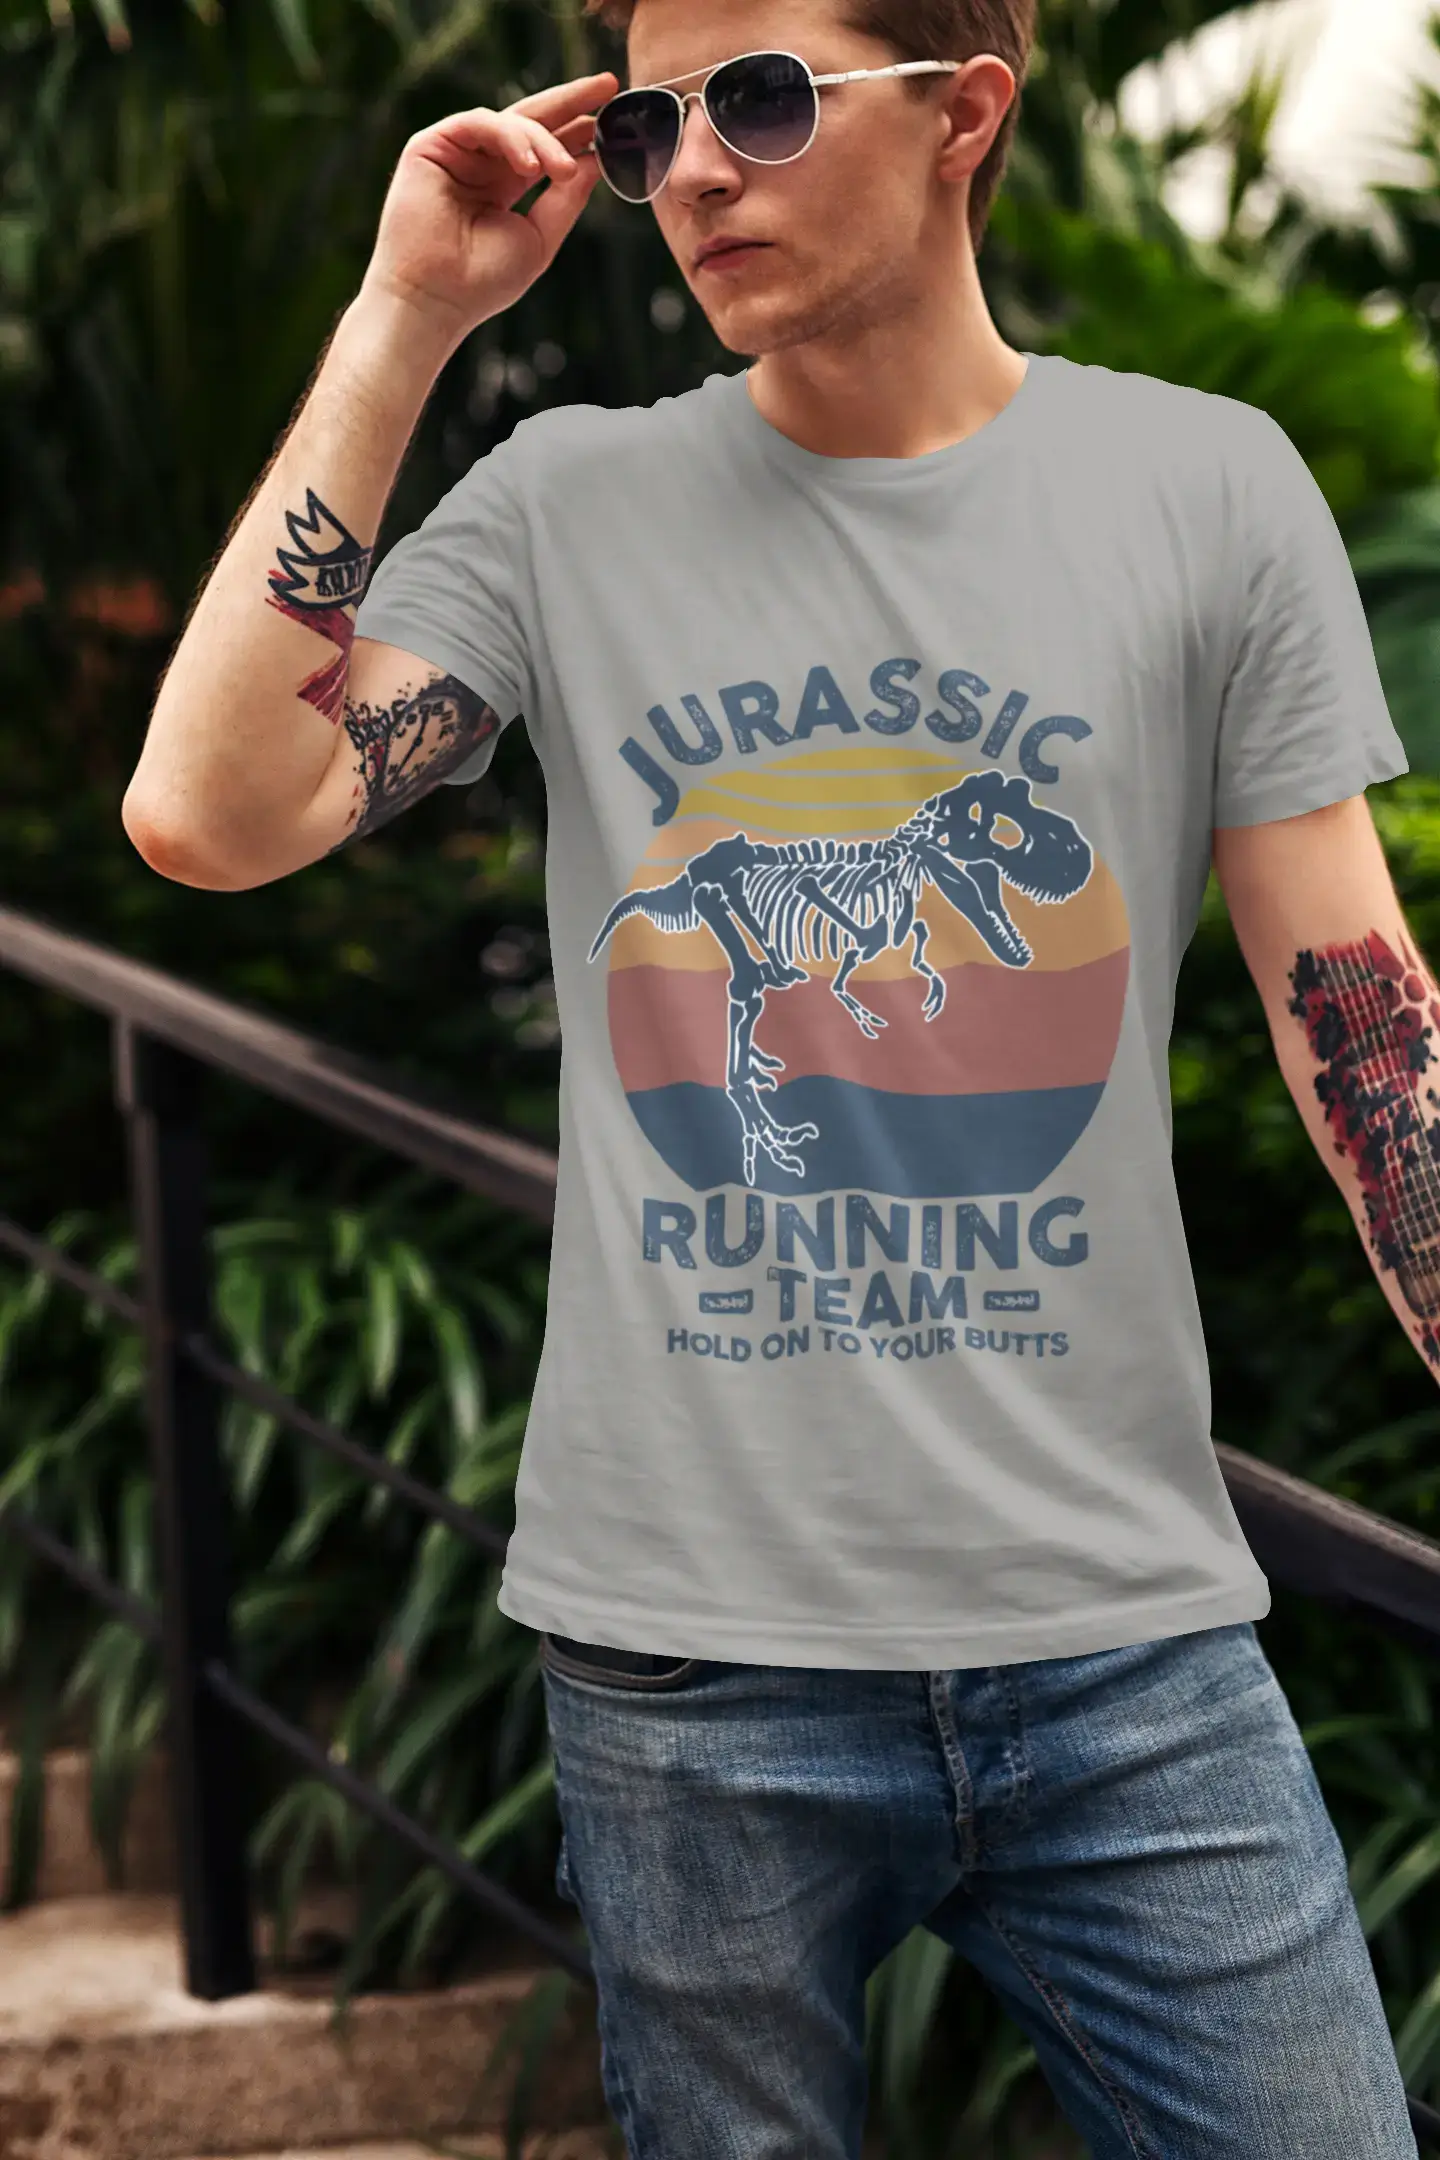 ULTRABASIC Herren-Neuheits-T-Shirt Jurassic Running Team – Lustiges Runner Squad-T-Shirt